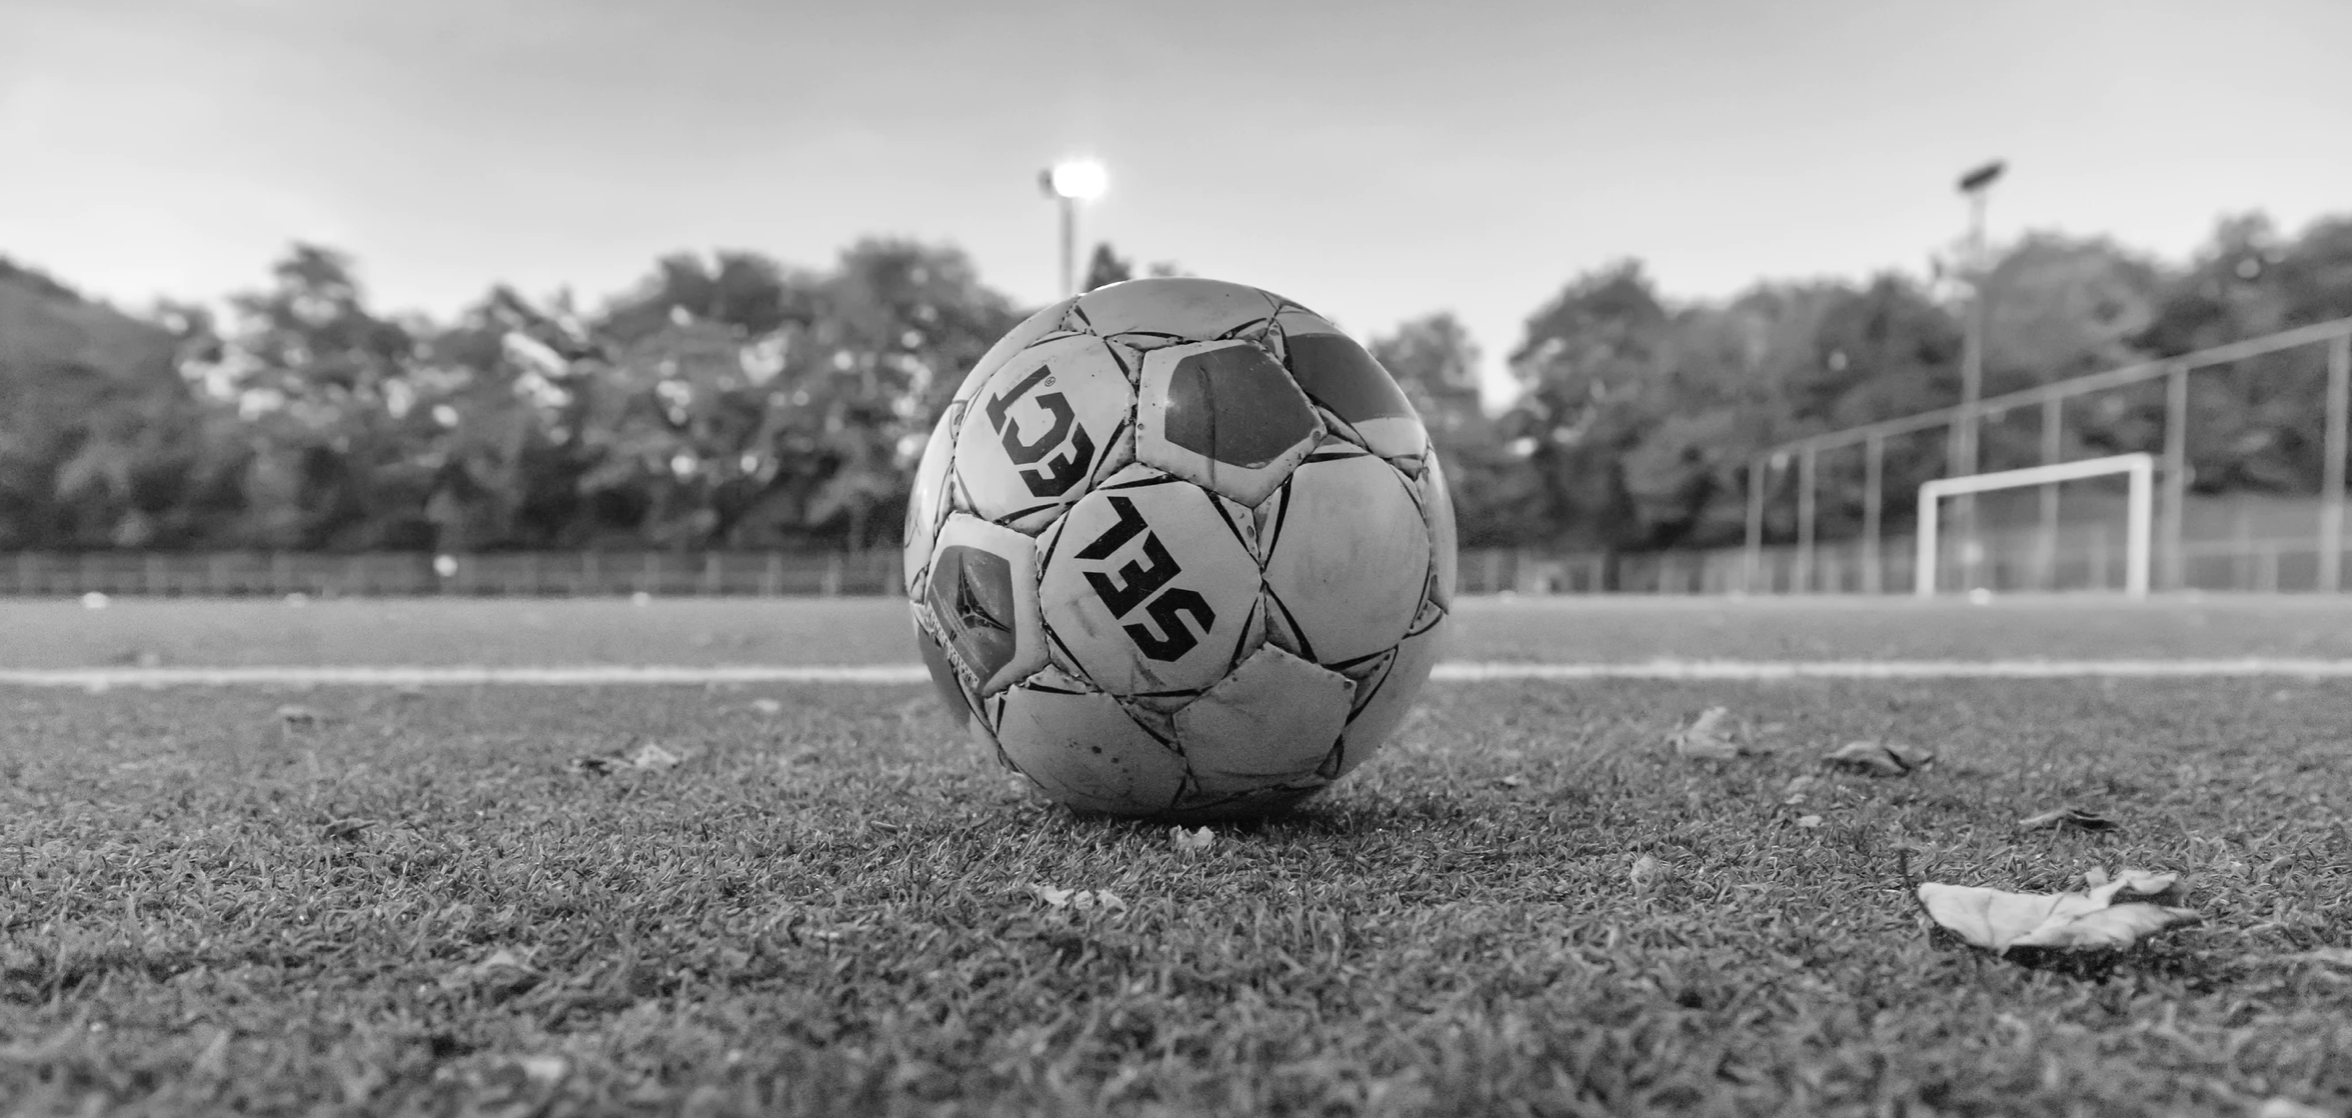 More than a game: Το Sombrero ξέρει να μας ταξιδεύει μέσα από το ποδόσφαιρο